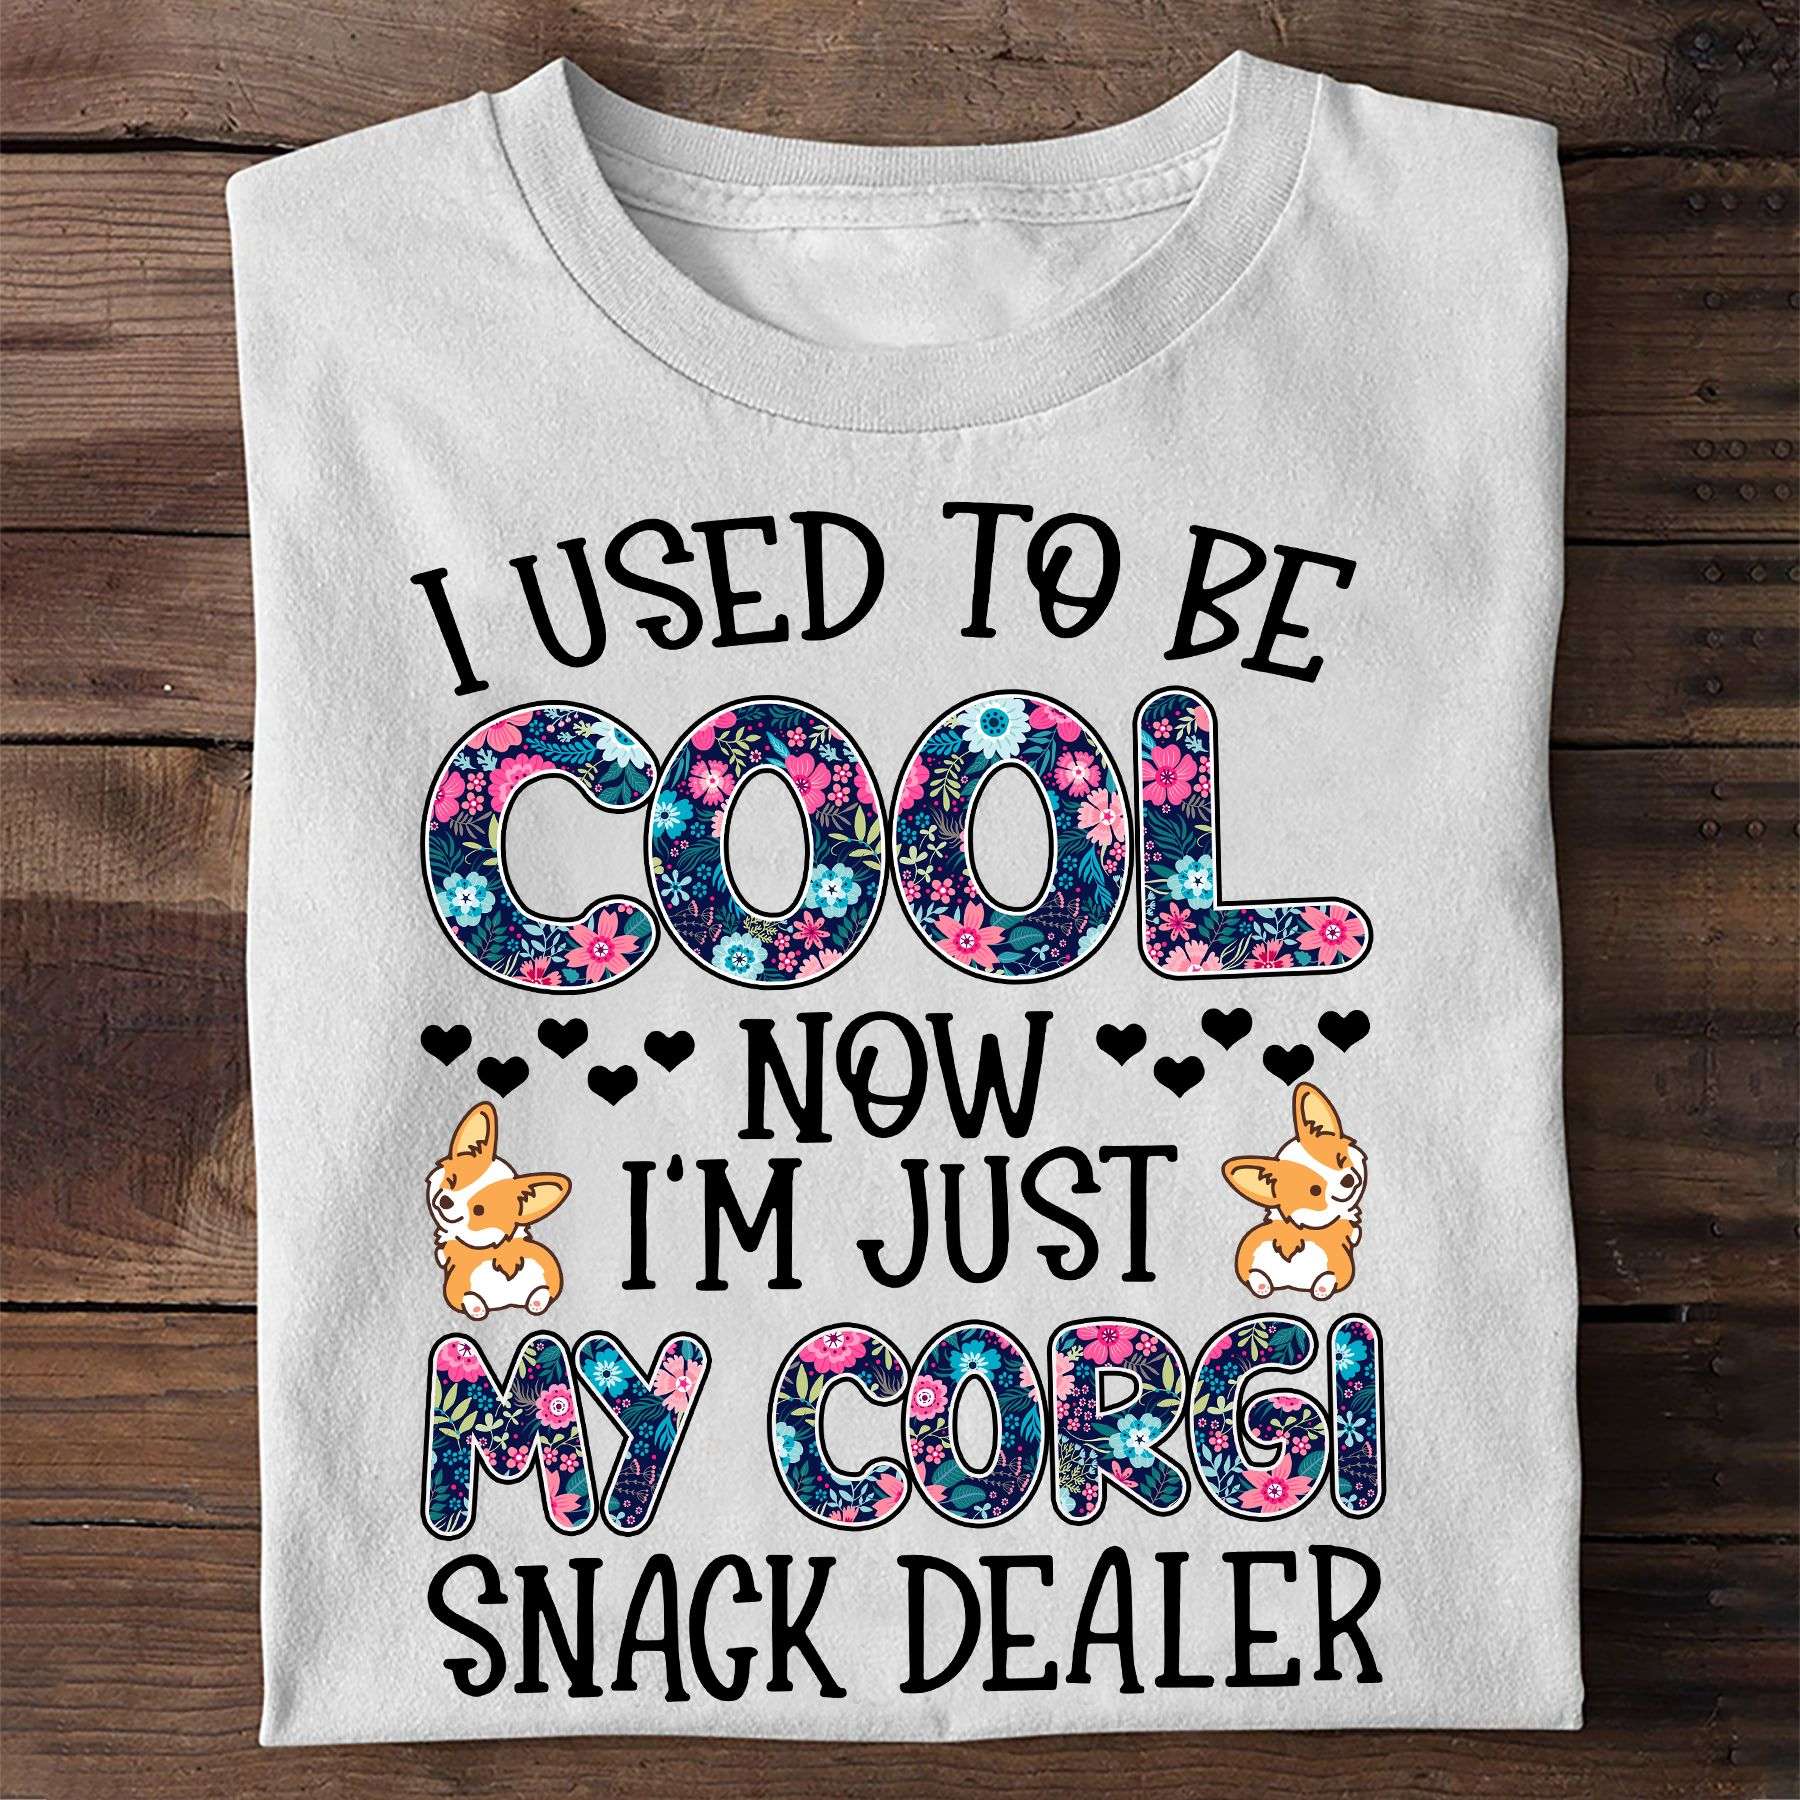 I used to be cool now I'm just my Corgi snack dealer - Corgi dog owner